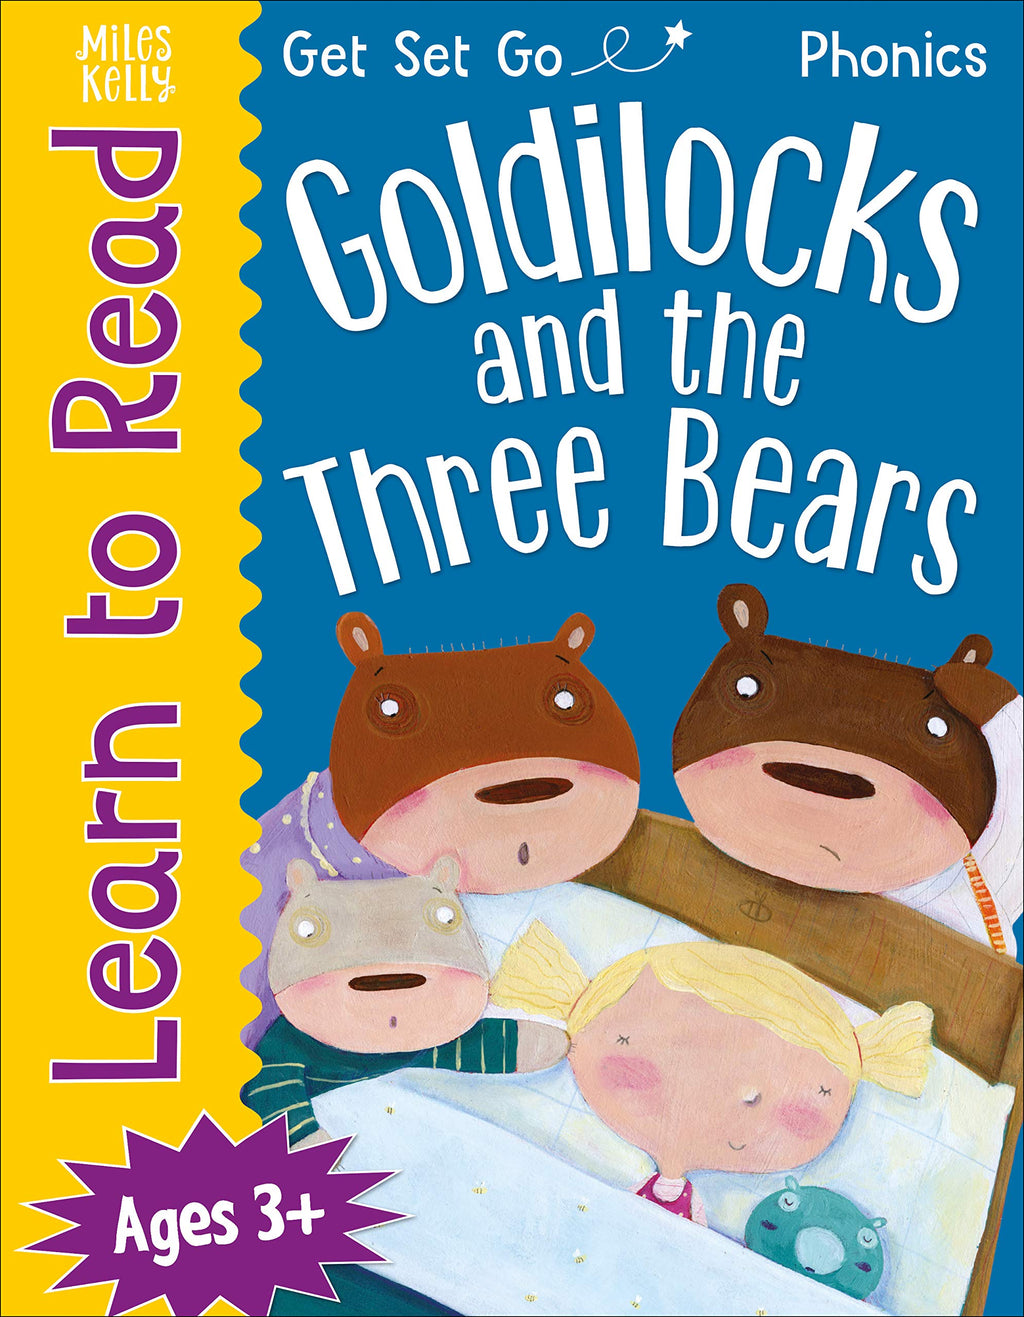 Get Set Go: Learn to Read - Goldilocks and the Three Bears